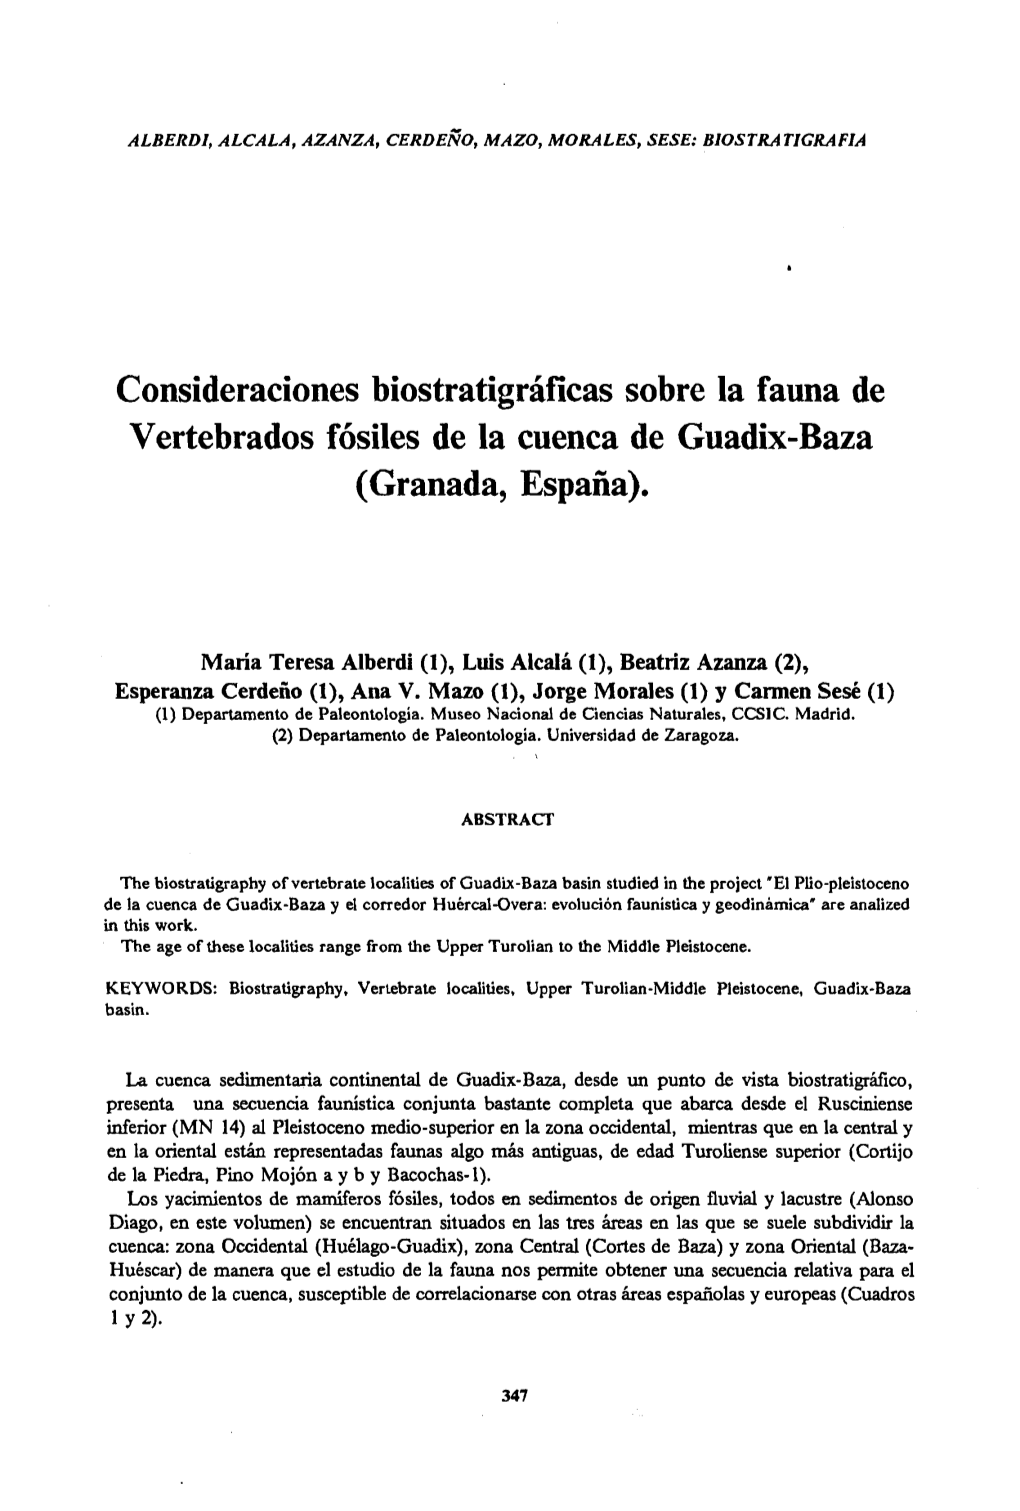 Alberdi Et Al 1989 Bioestratigrafia Vertebrados Fosiles Guadix Baza